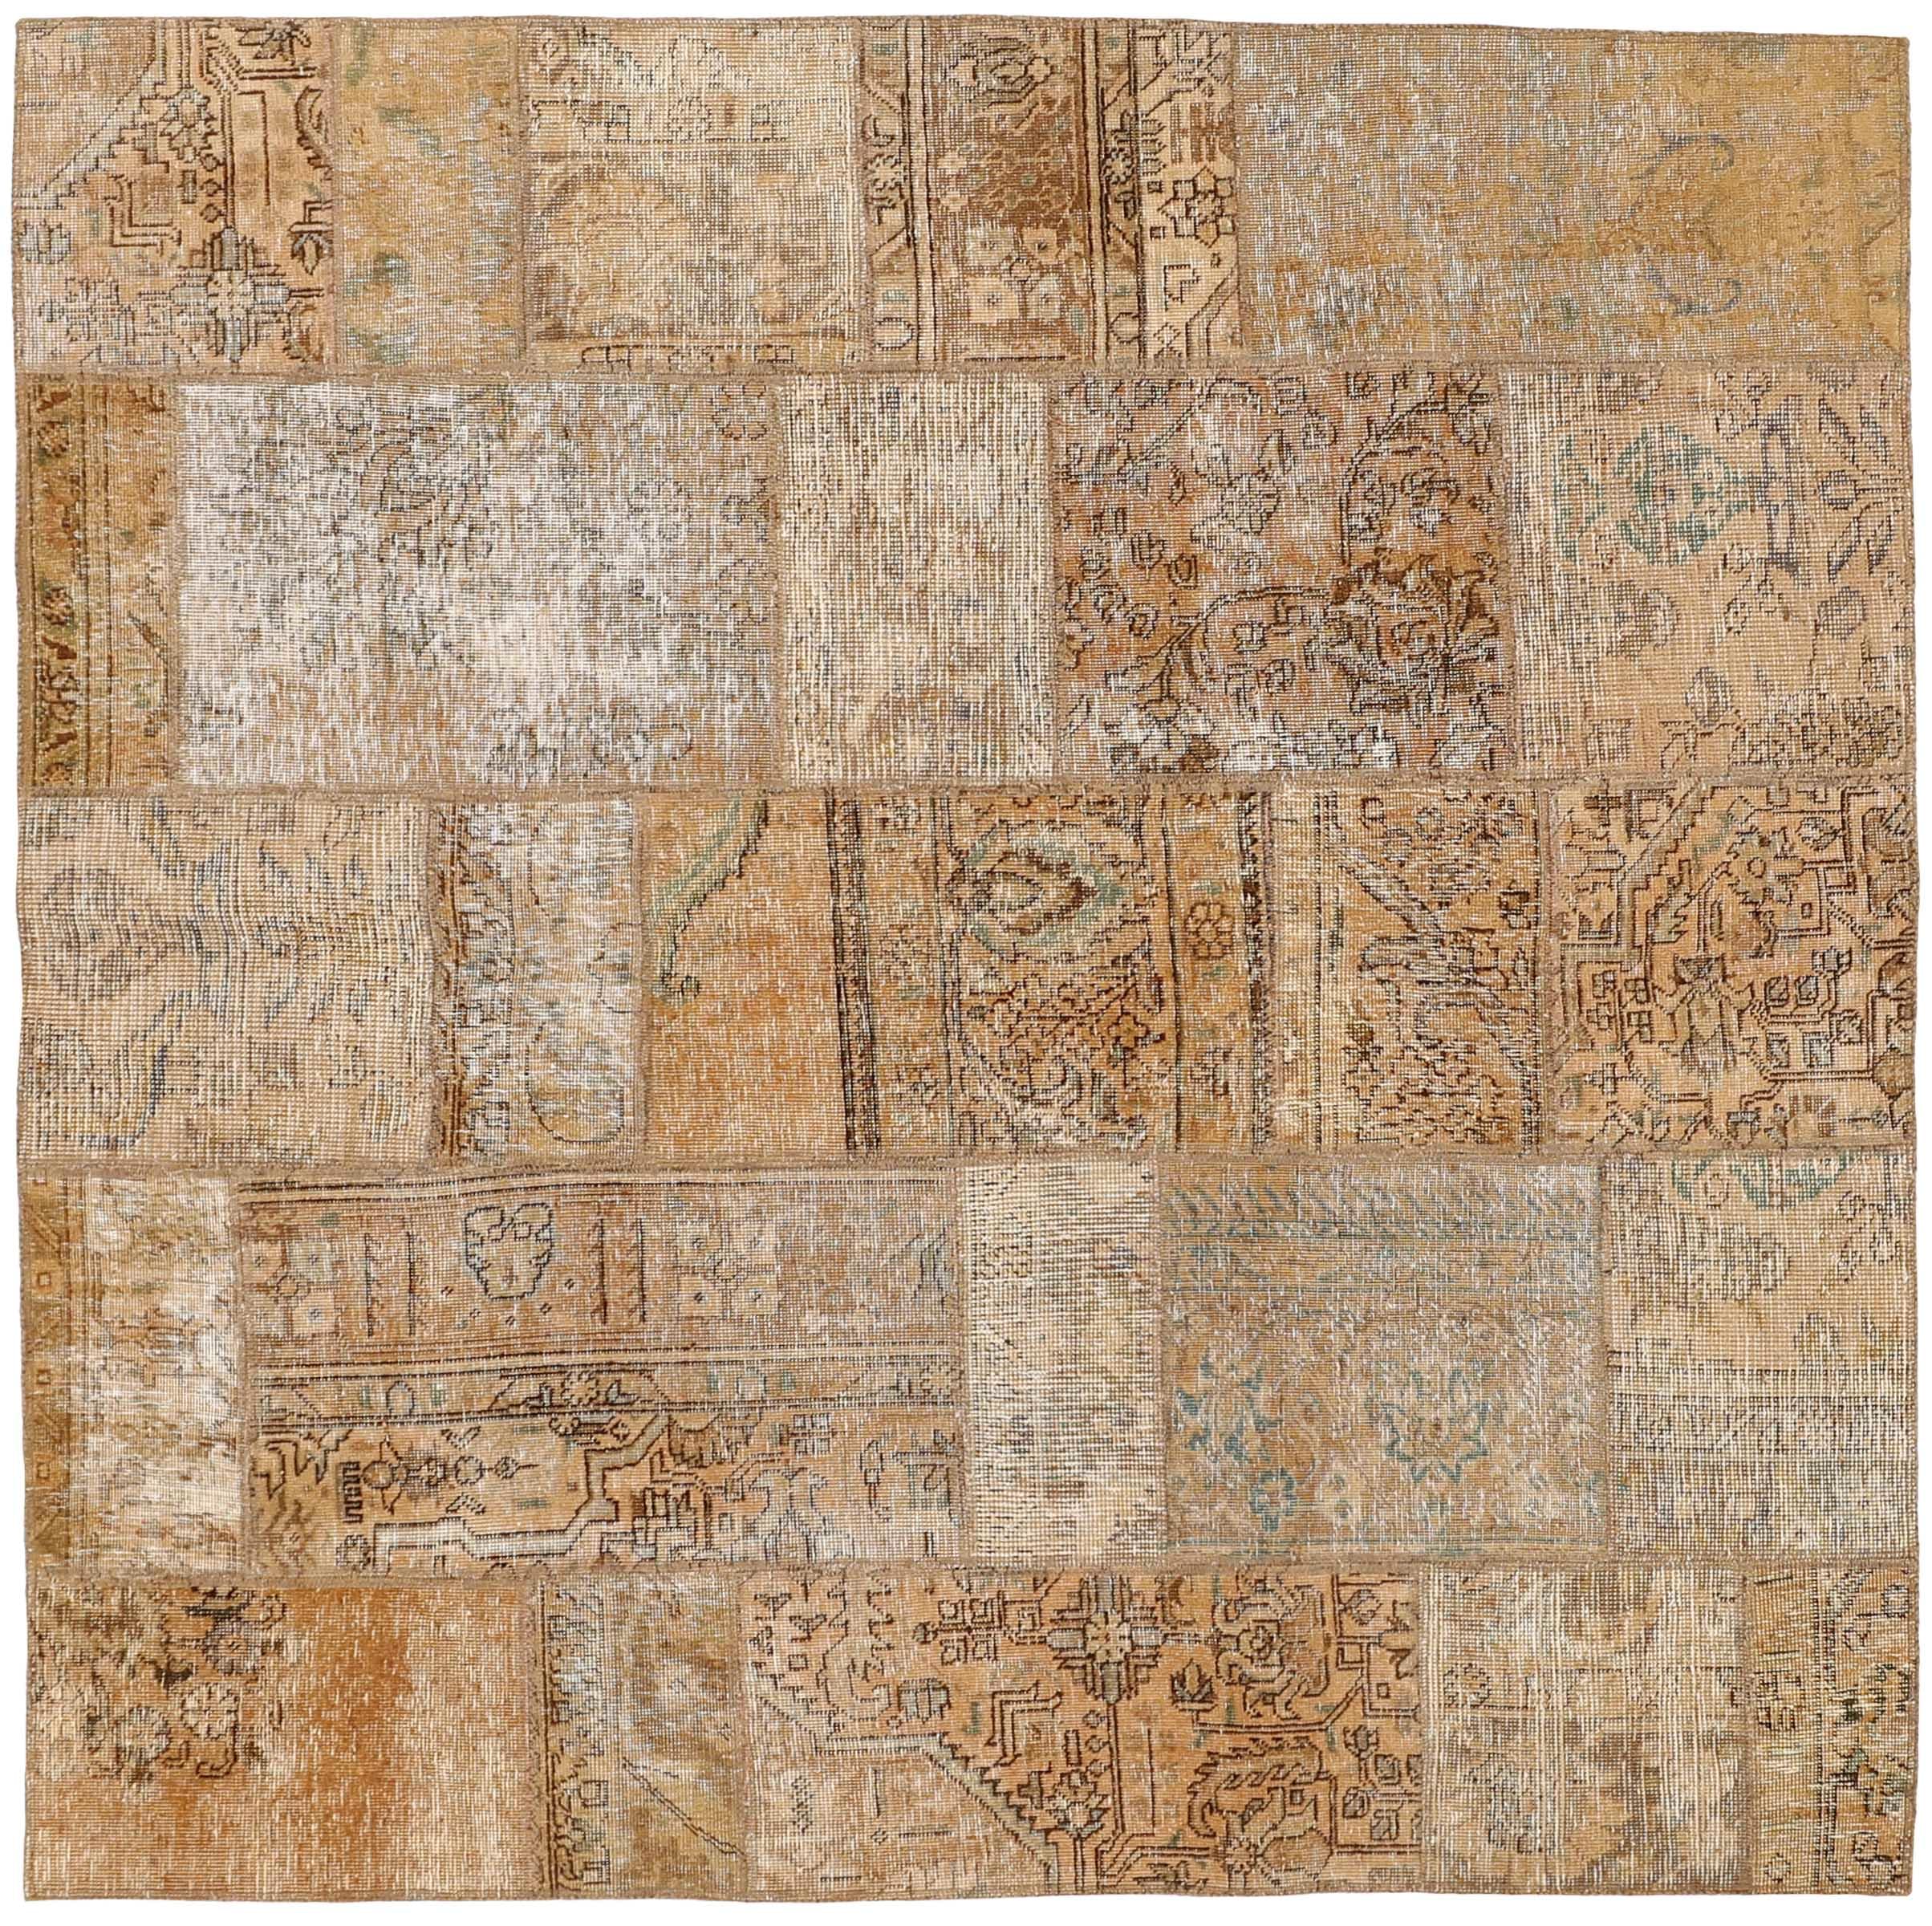 Authentic Persian beige patchwork square rug